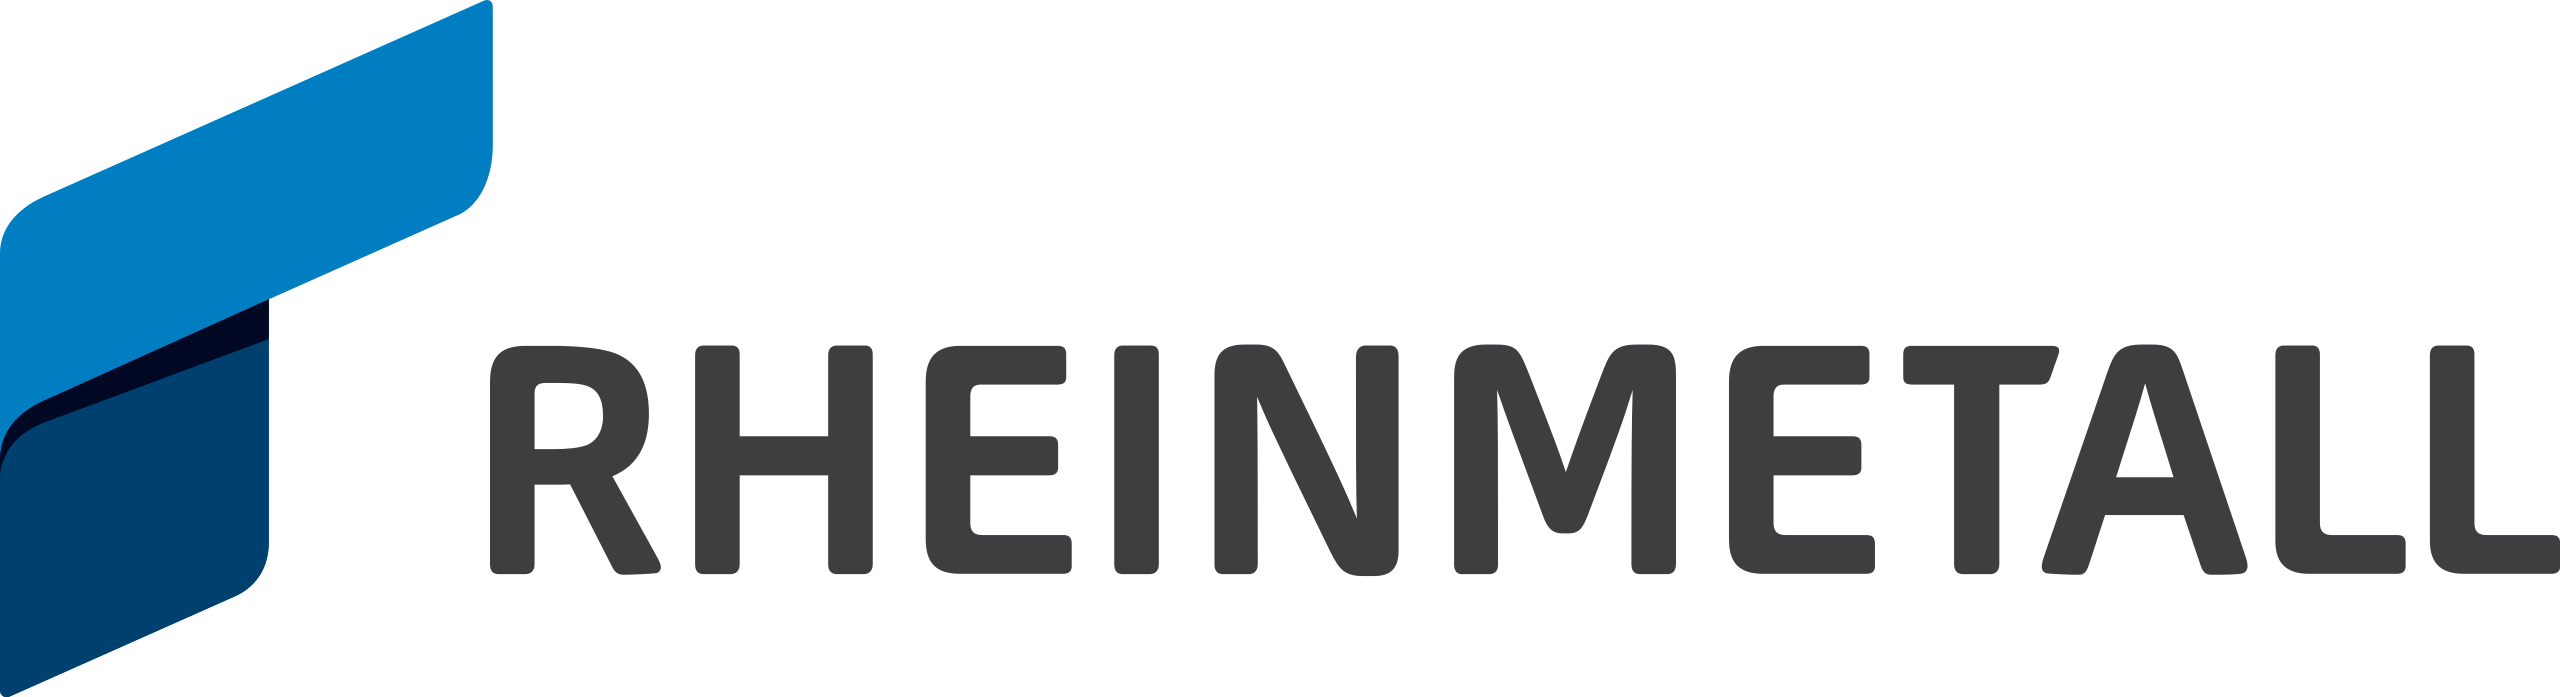 Rheinmetall Logo 2021.svg